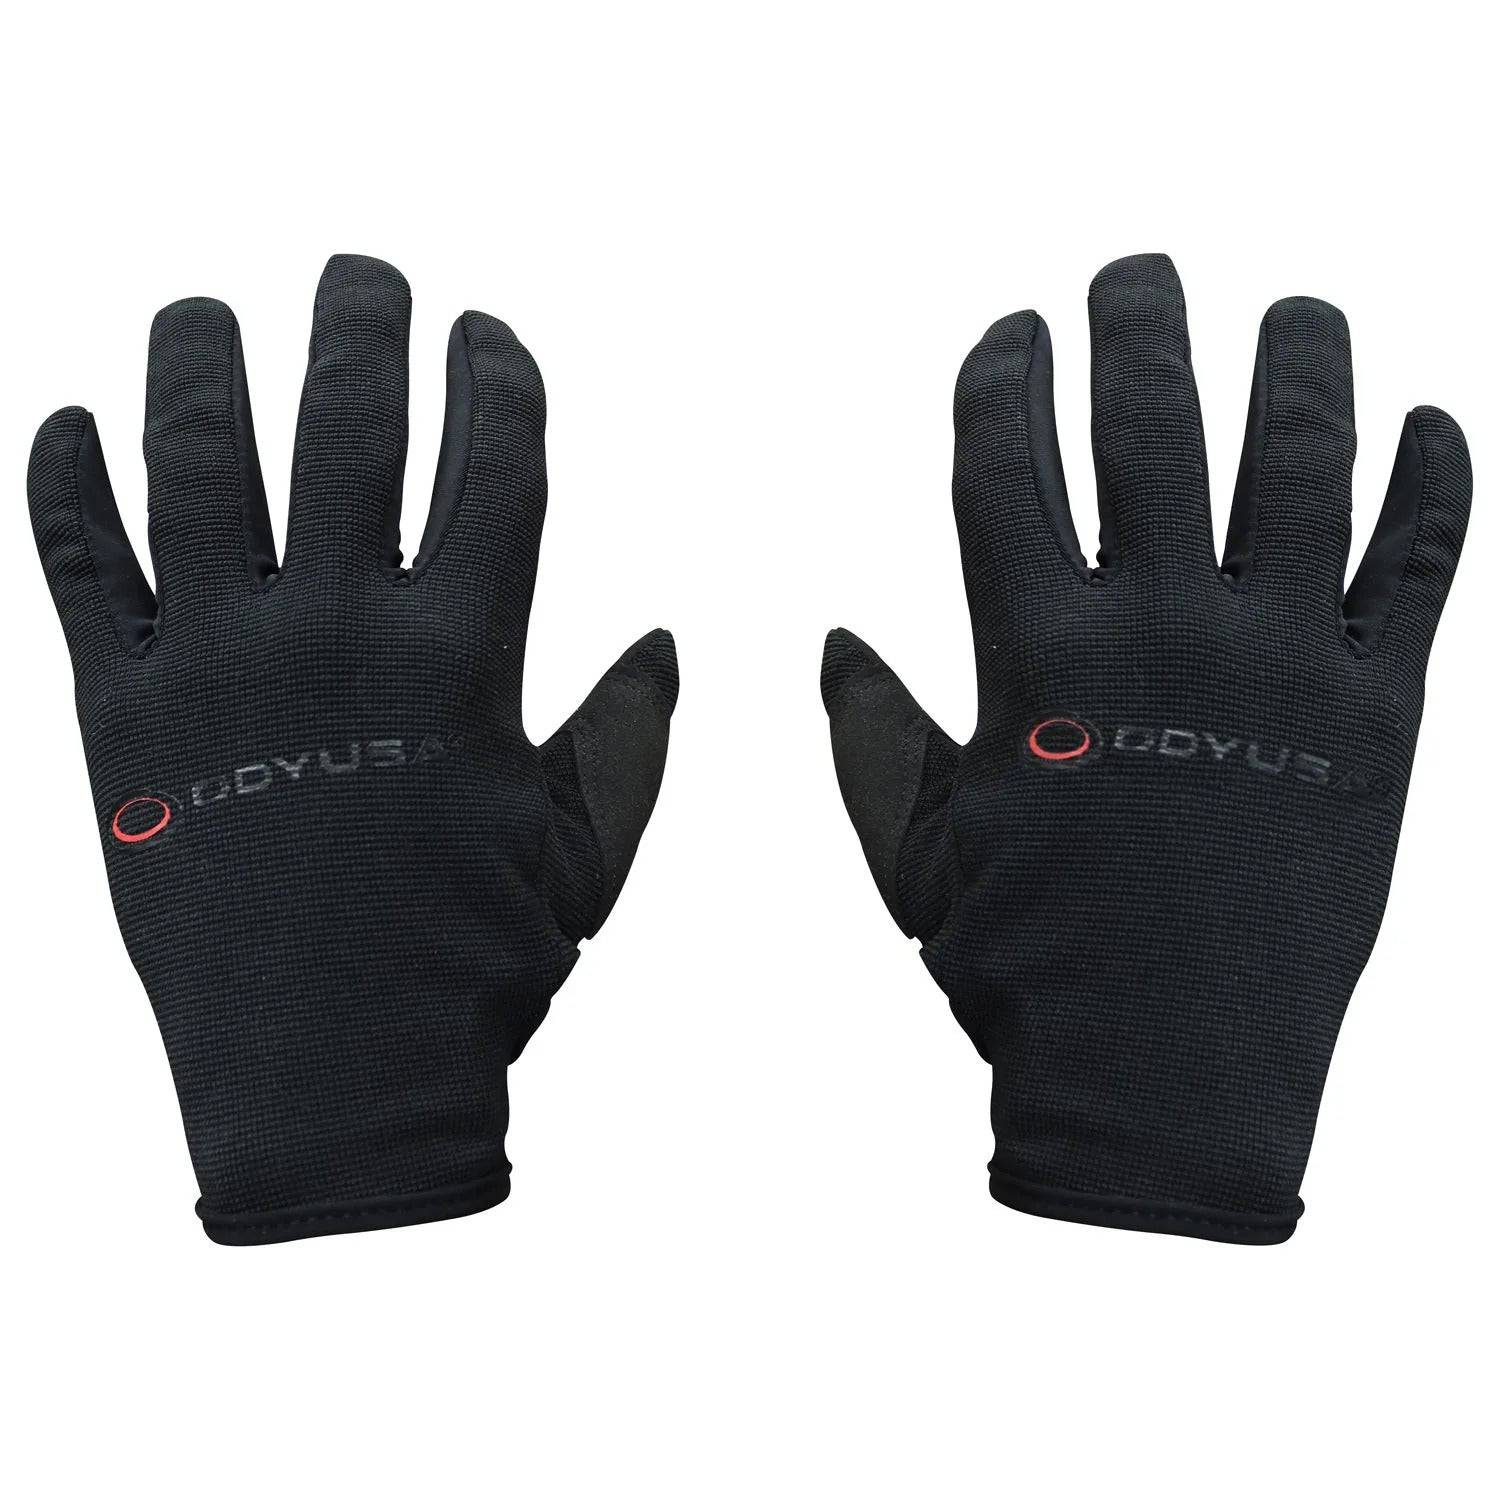 Odyssey SKODYGL, Large Size Work Gloves - Hollywood DJ